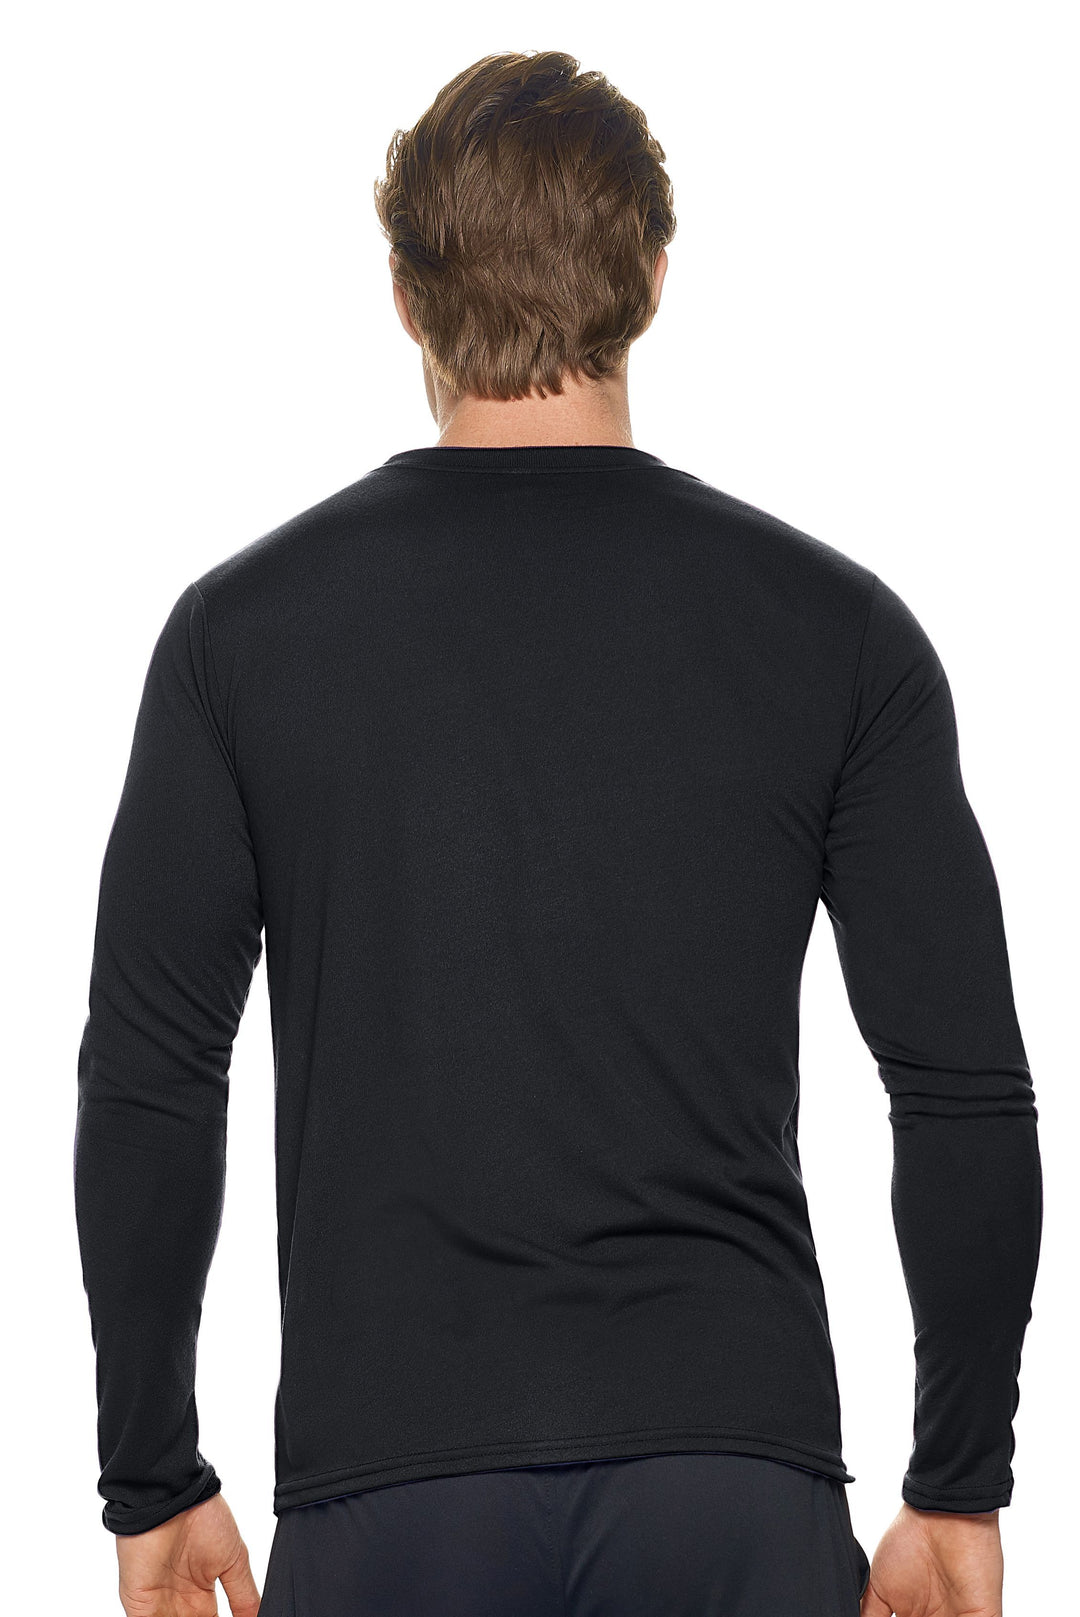 Men's Physical Training Long Sleeve T-Shirt